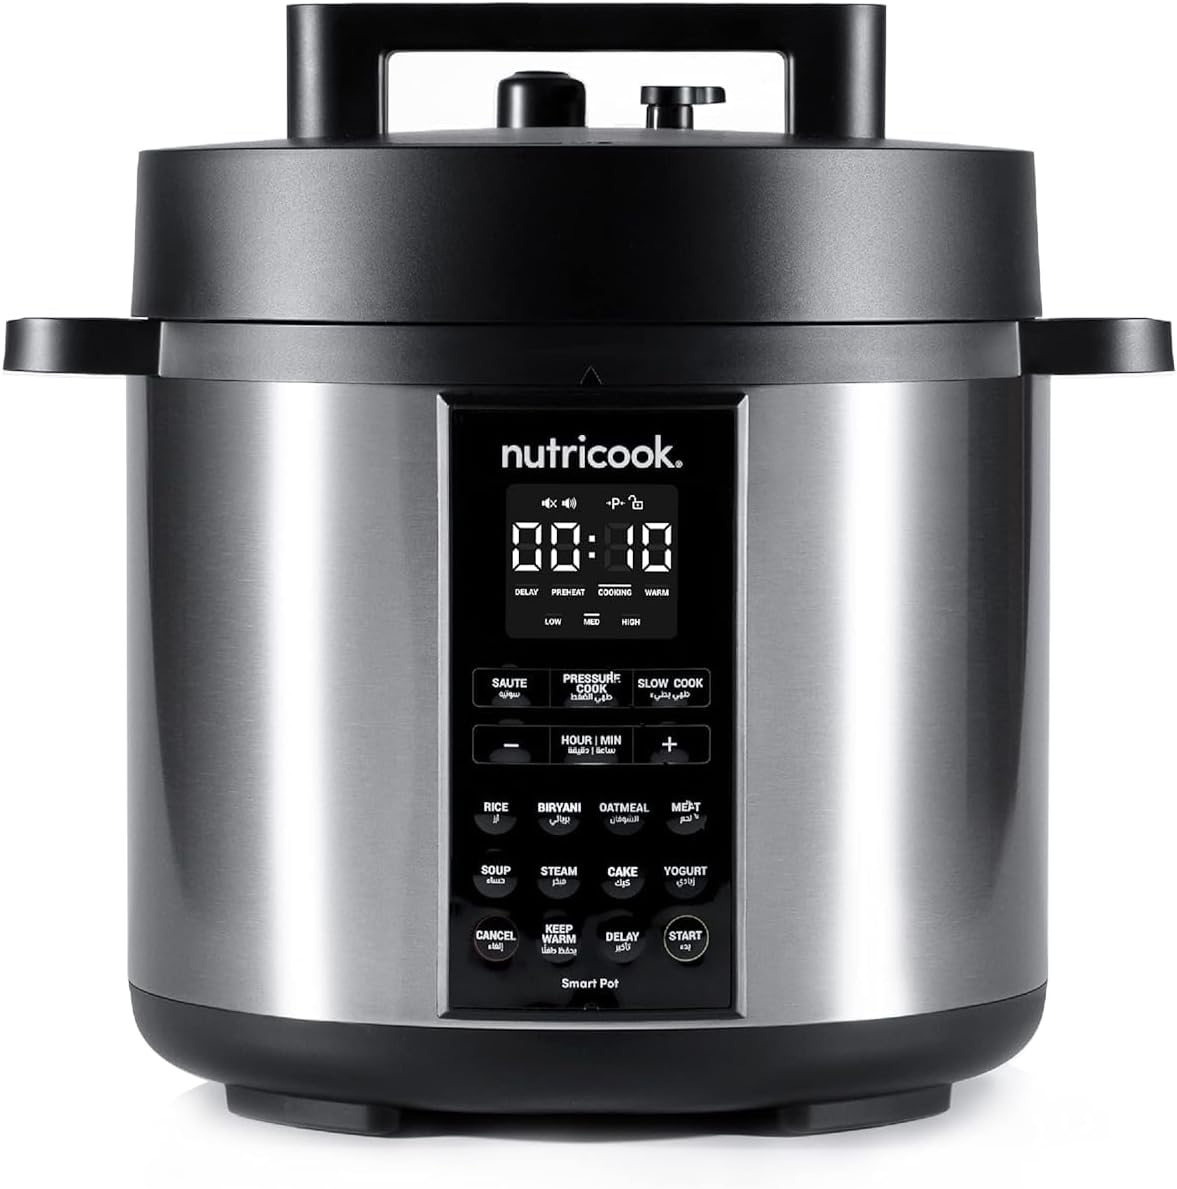 Nutricook Smart Pot 2 / 8L / Electric Pressure Cooker - Silver